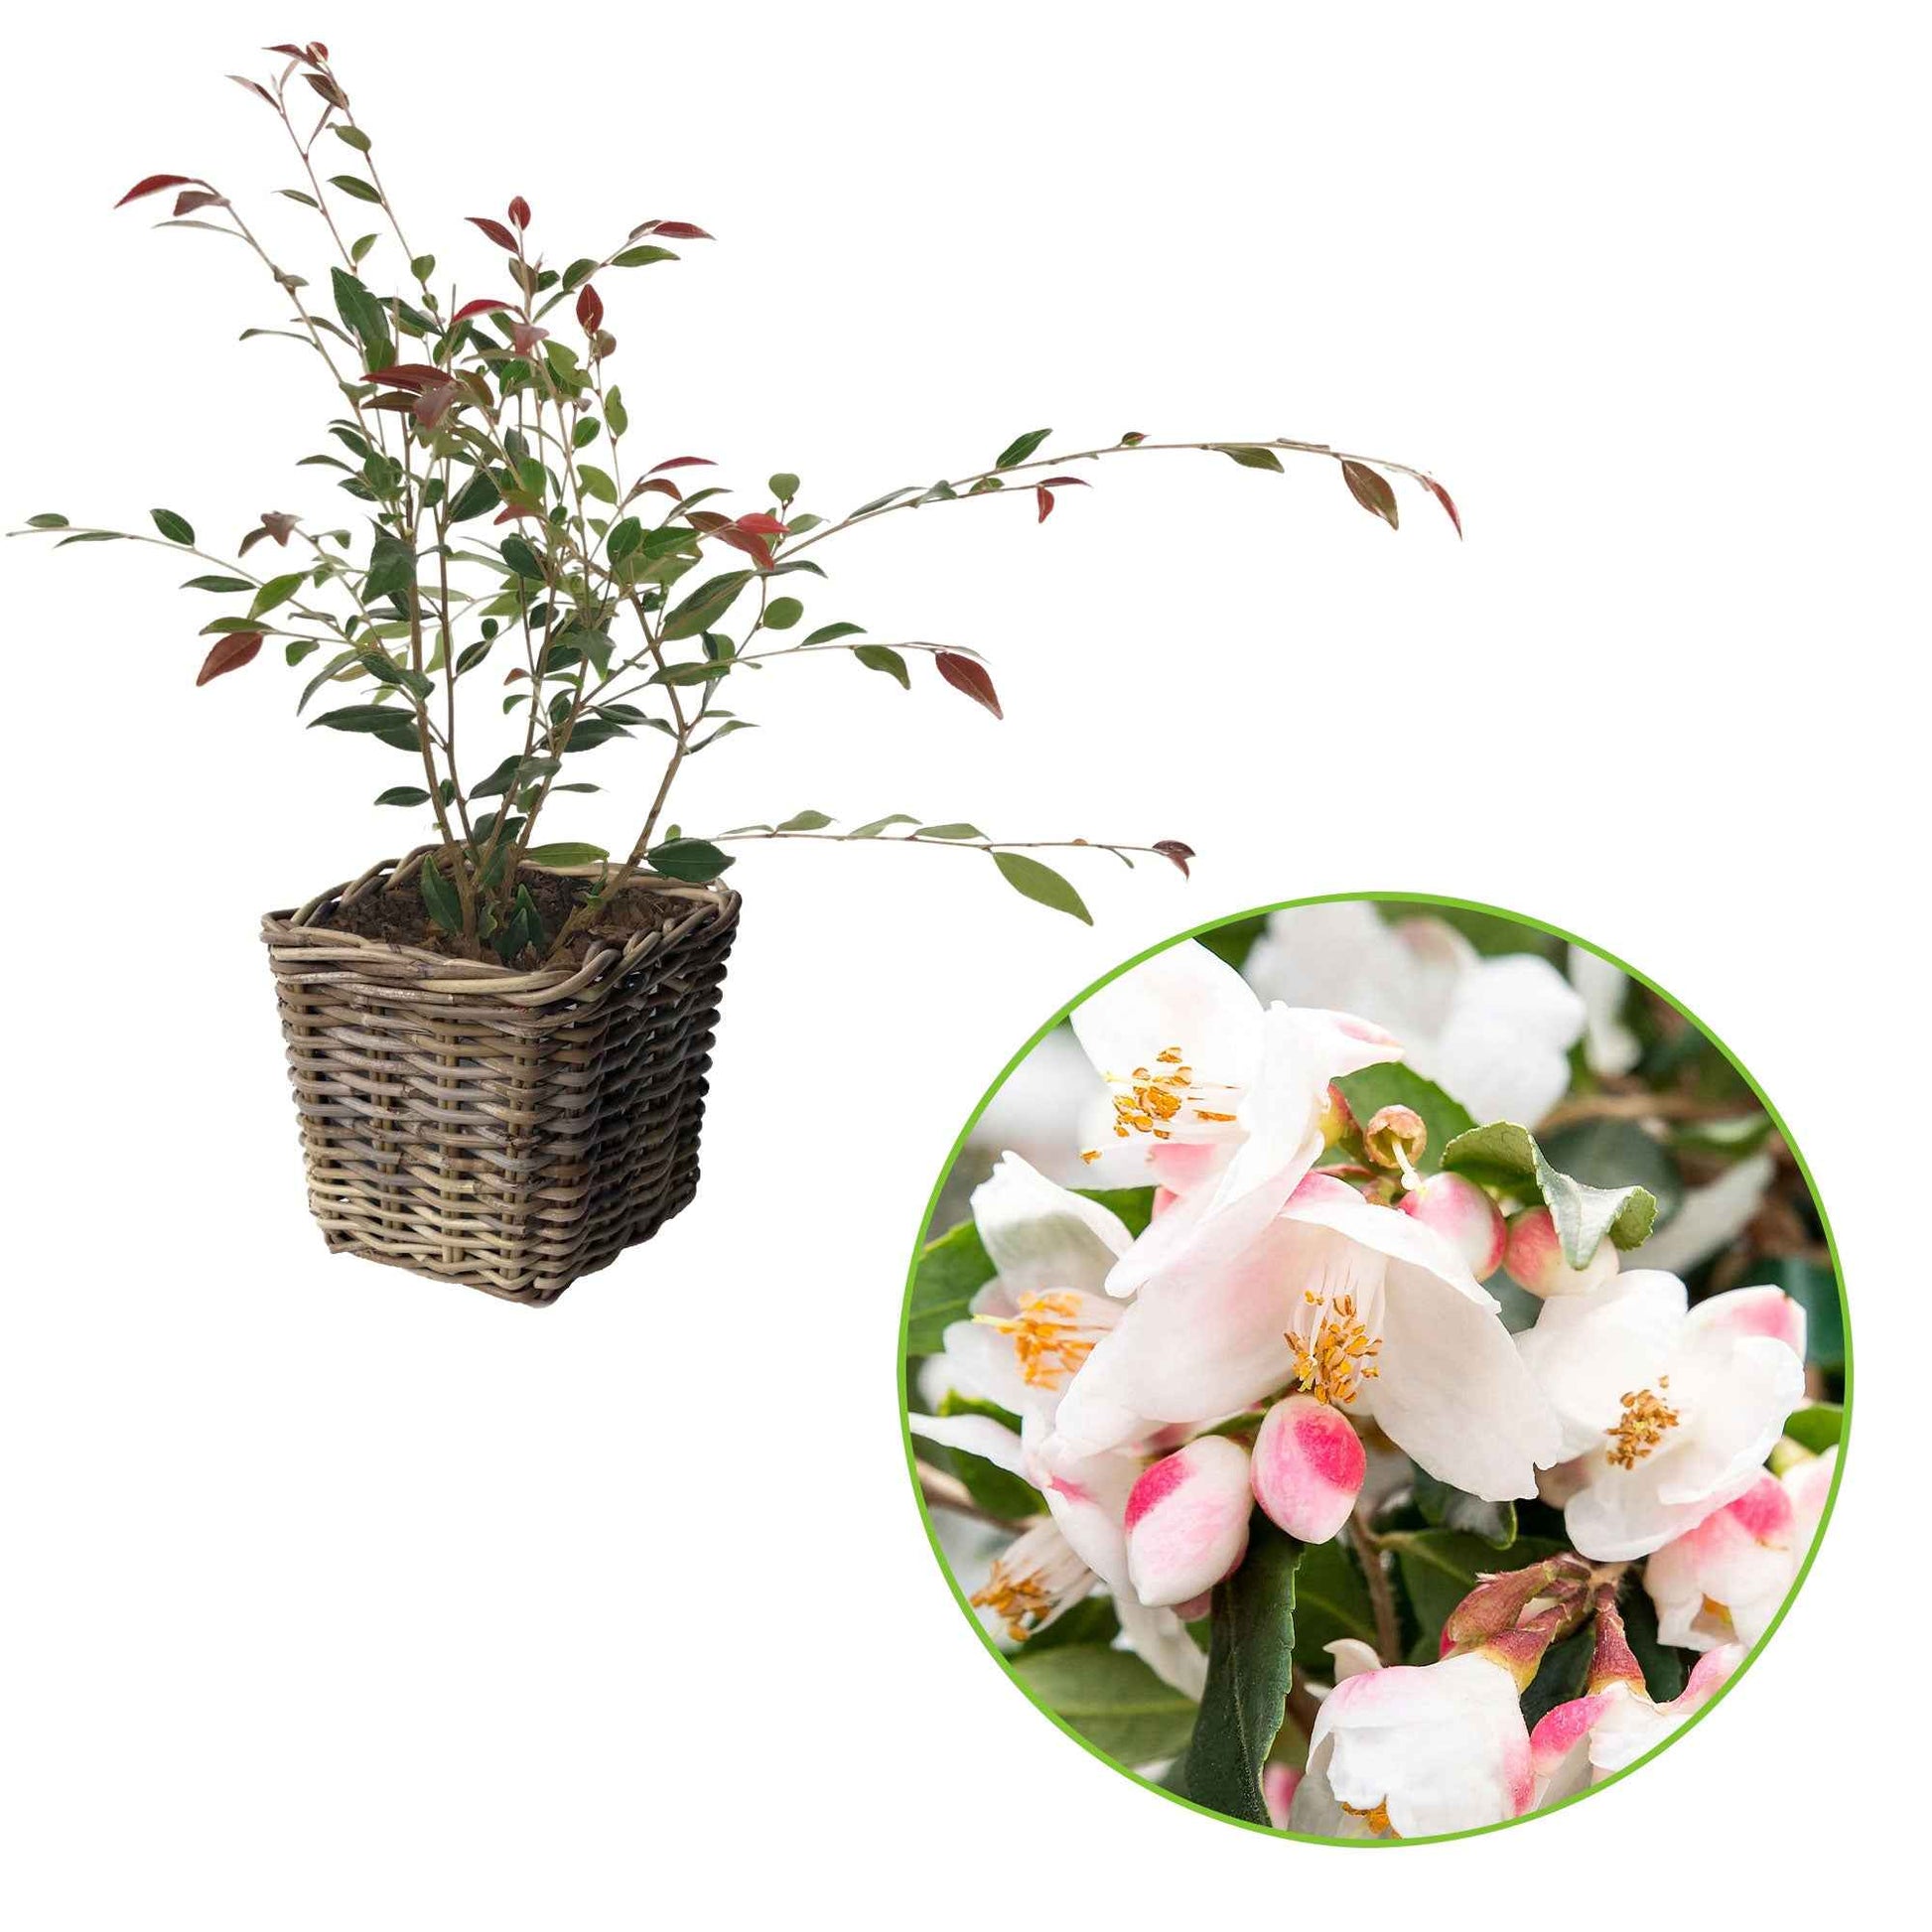 Camellia 'Cupido' blanc incl. panier - Arbustes à fleurs